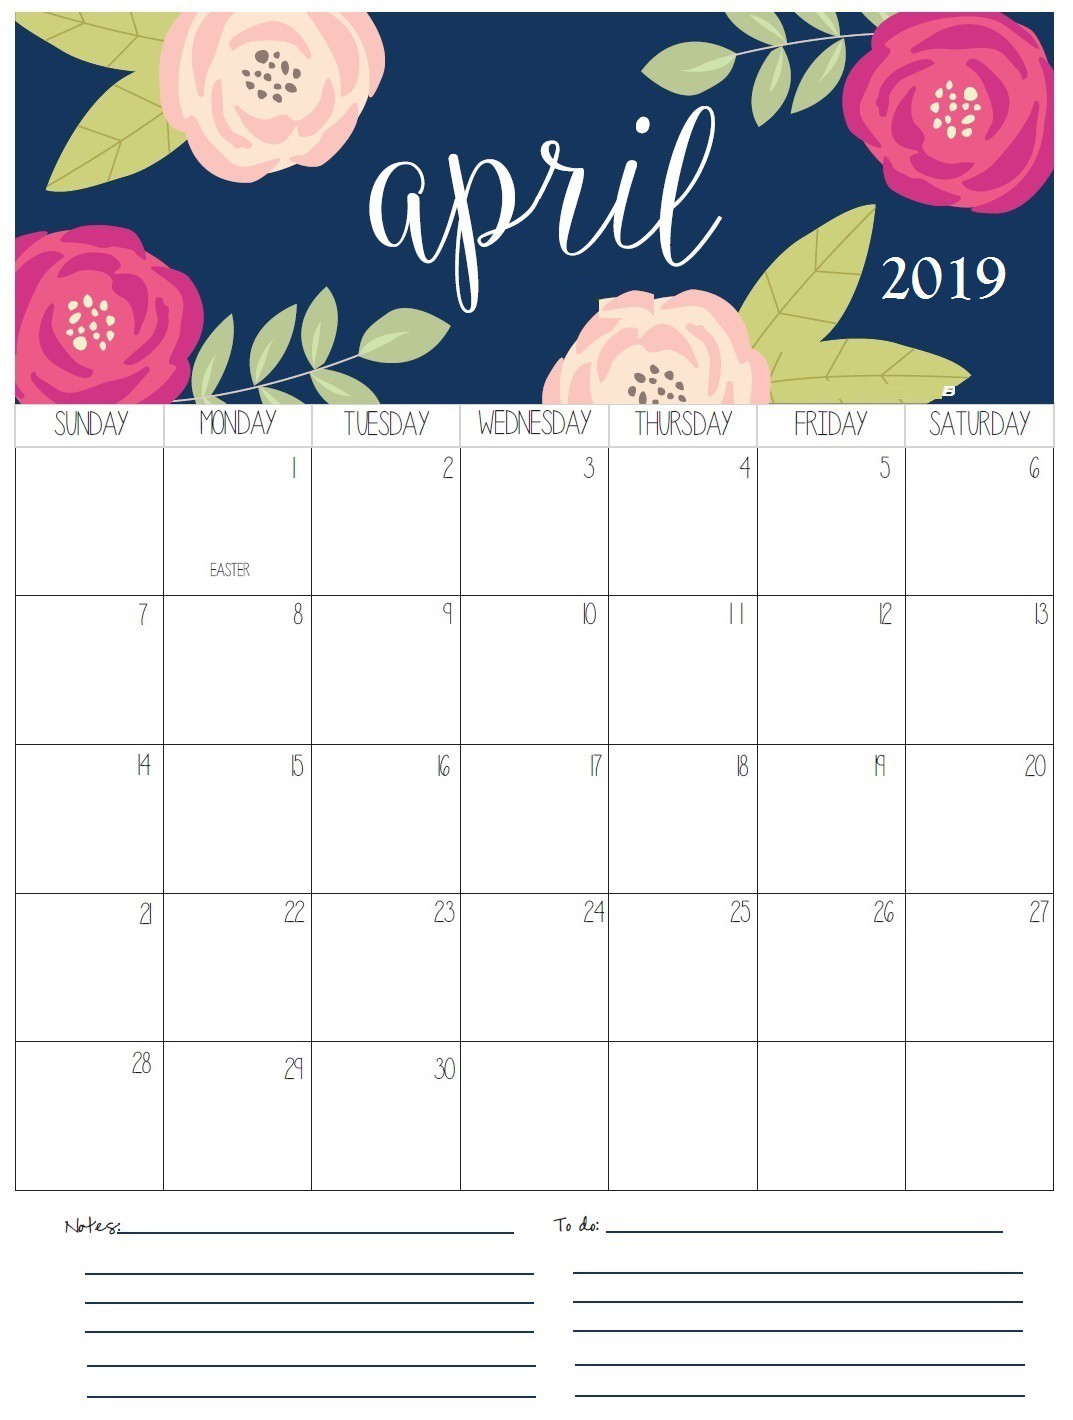 Monthly Printable Calendar 2019